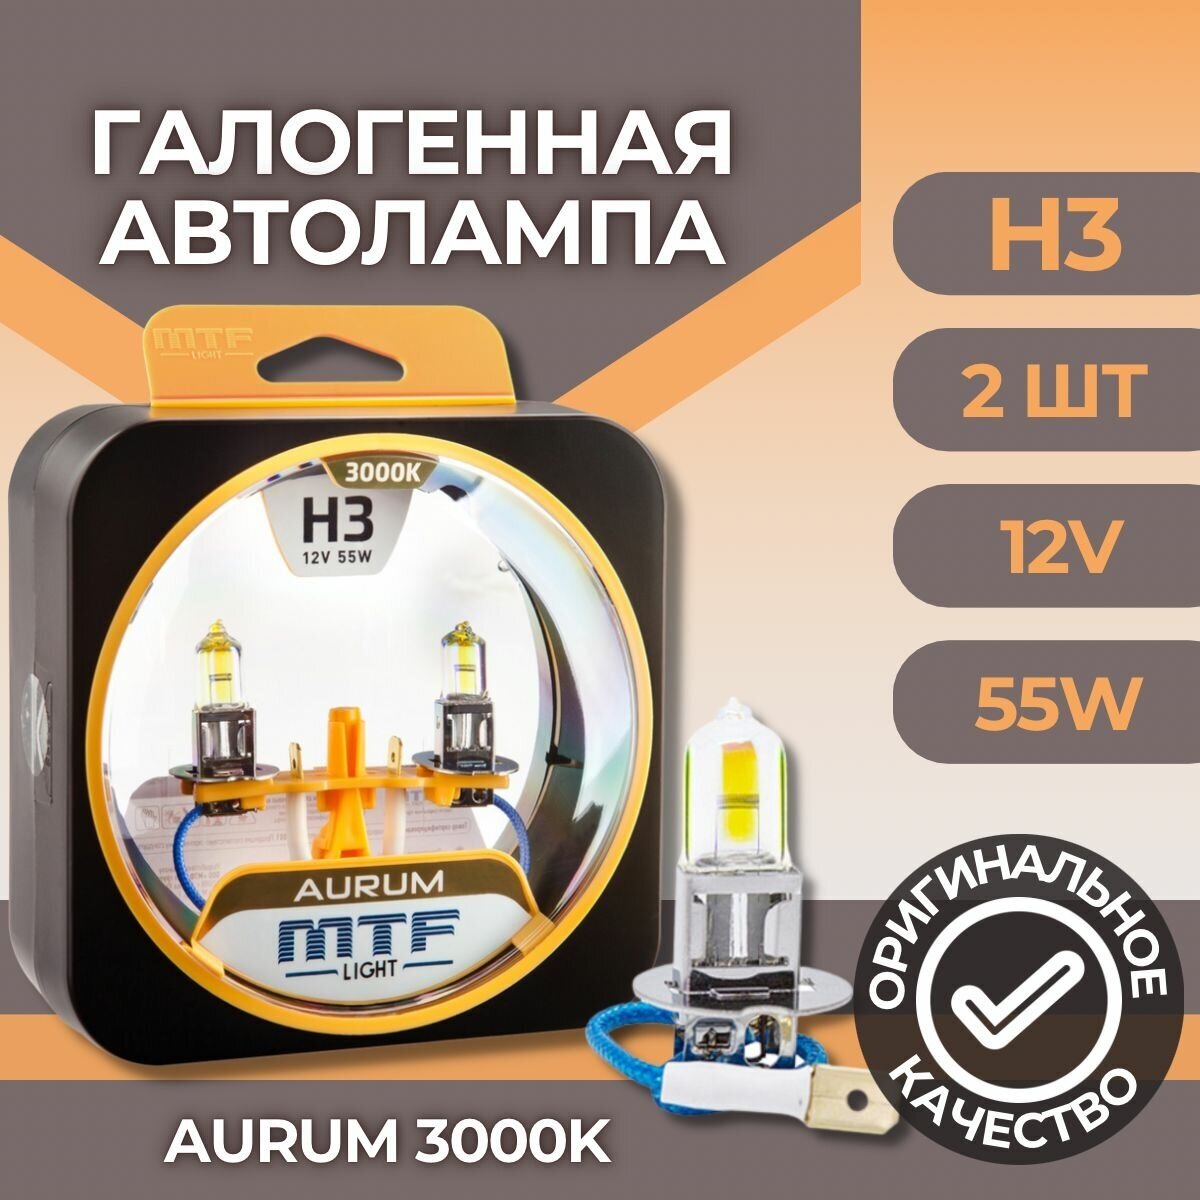 Галогеновые лампы MTF light Aurum 3000K H3